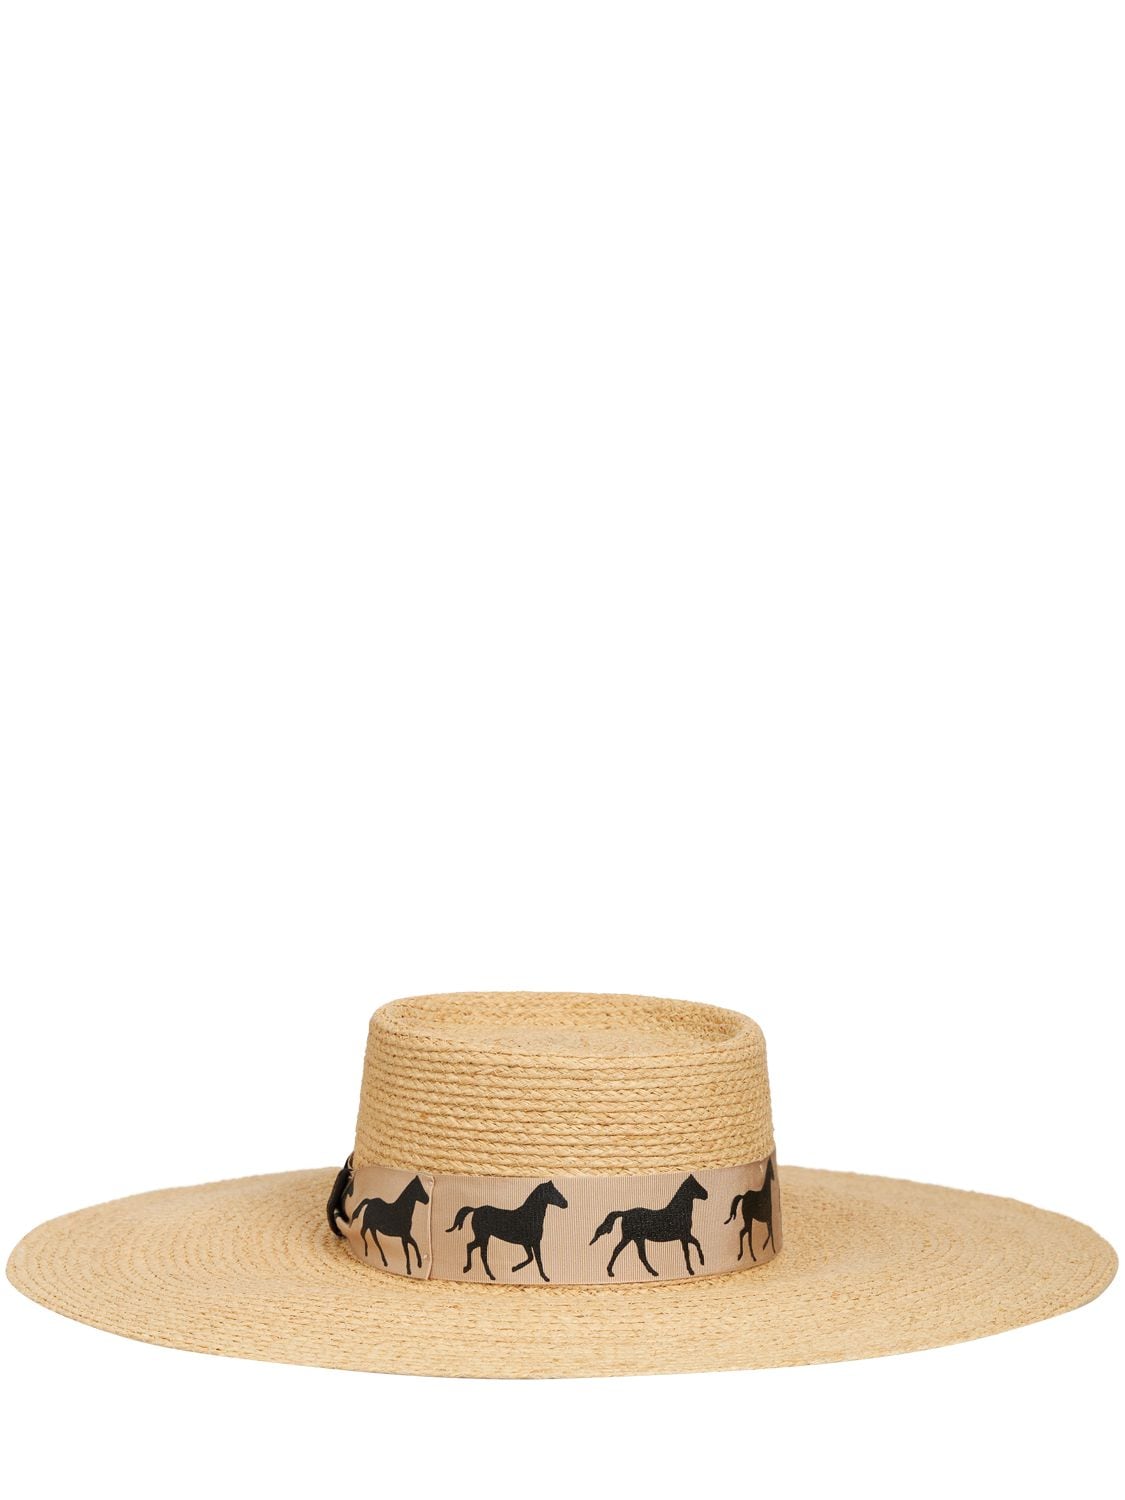 Borsalino X Àcheval Gaucho Straw Hat